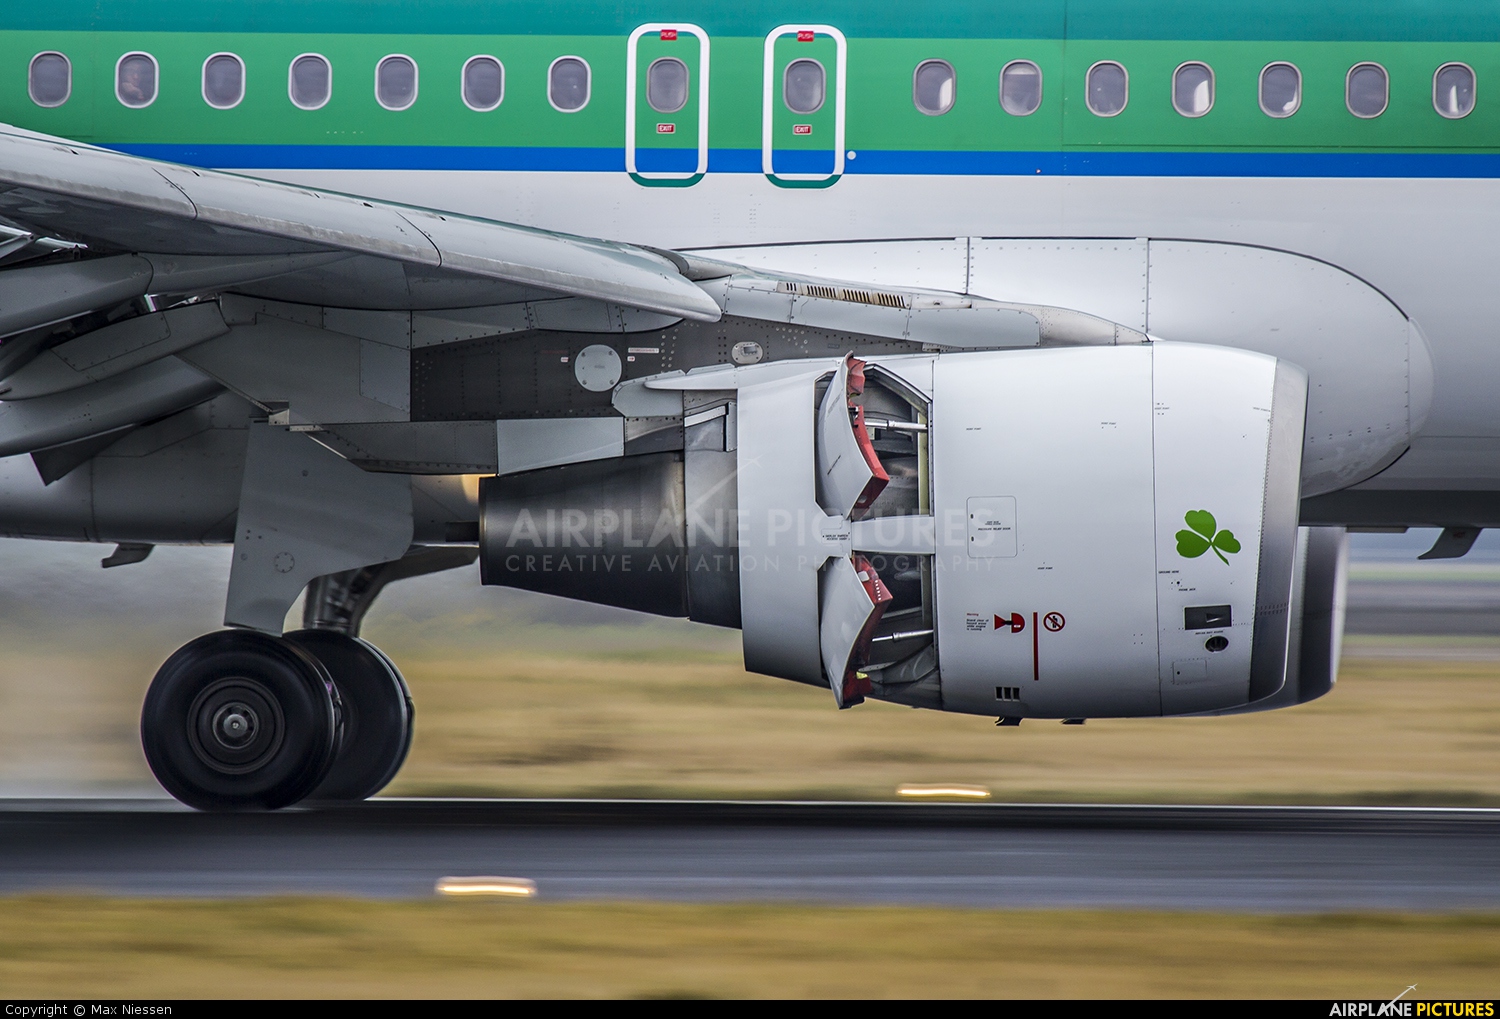 Aer Lingus EI-CVA aircraft at Amsterdam - Schiphol